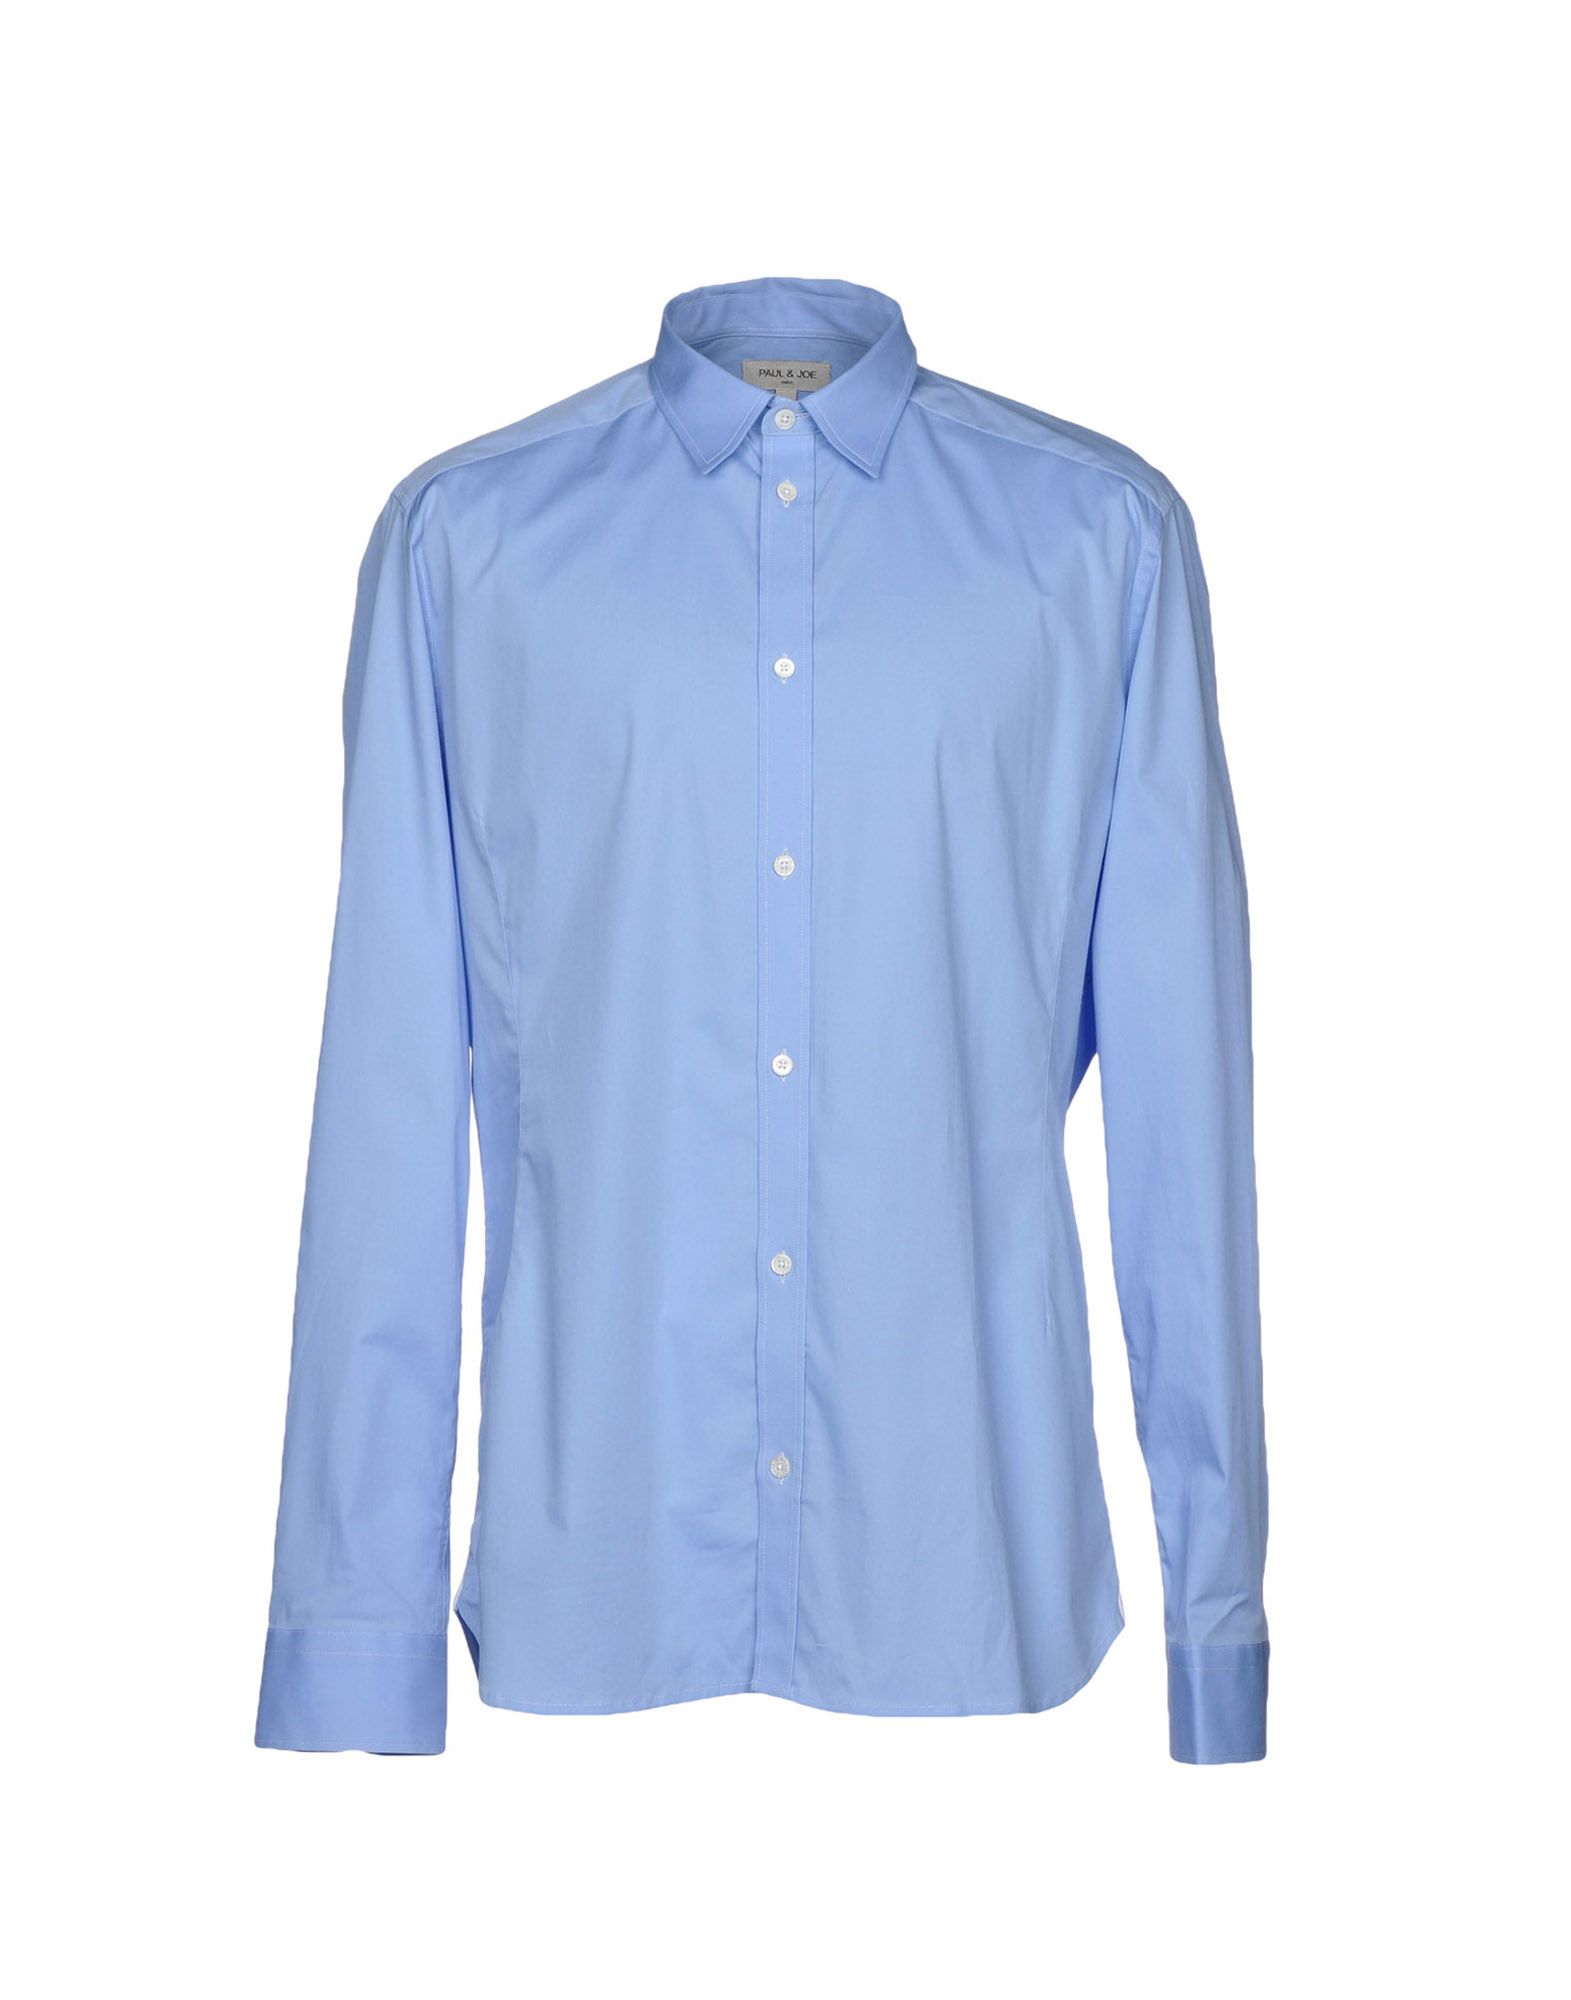 PAUL & JOE Solid colour shirt,38740270XO 8